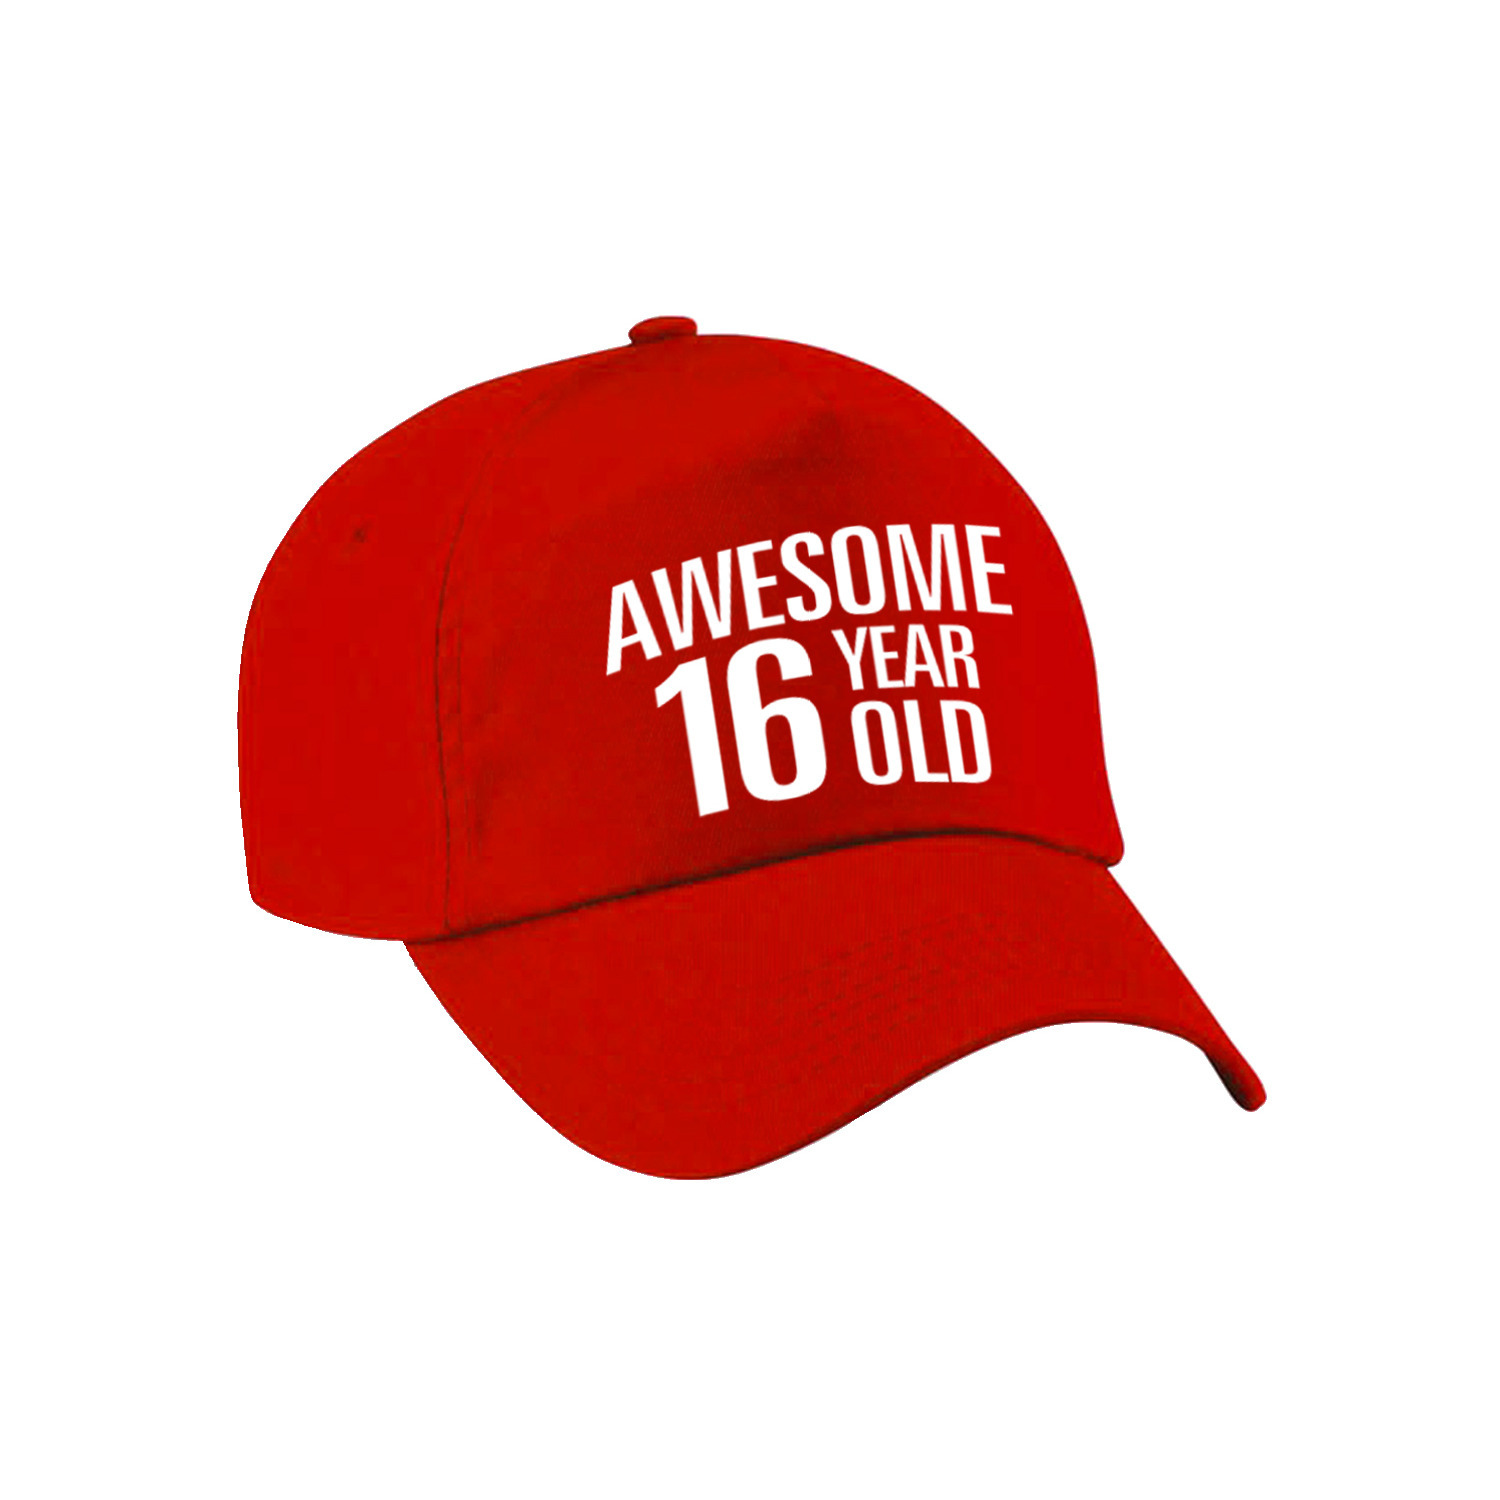 Awesome 16 year old verjaardag pet / cap rood voor dames en heren